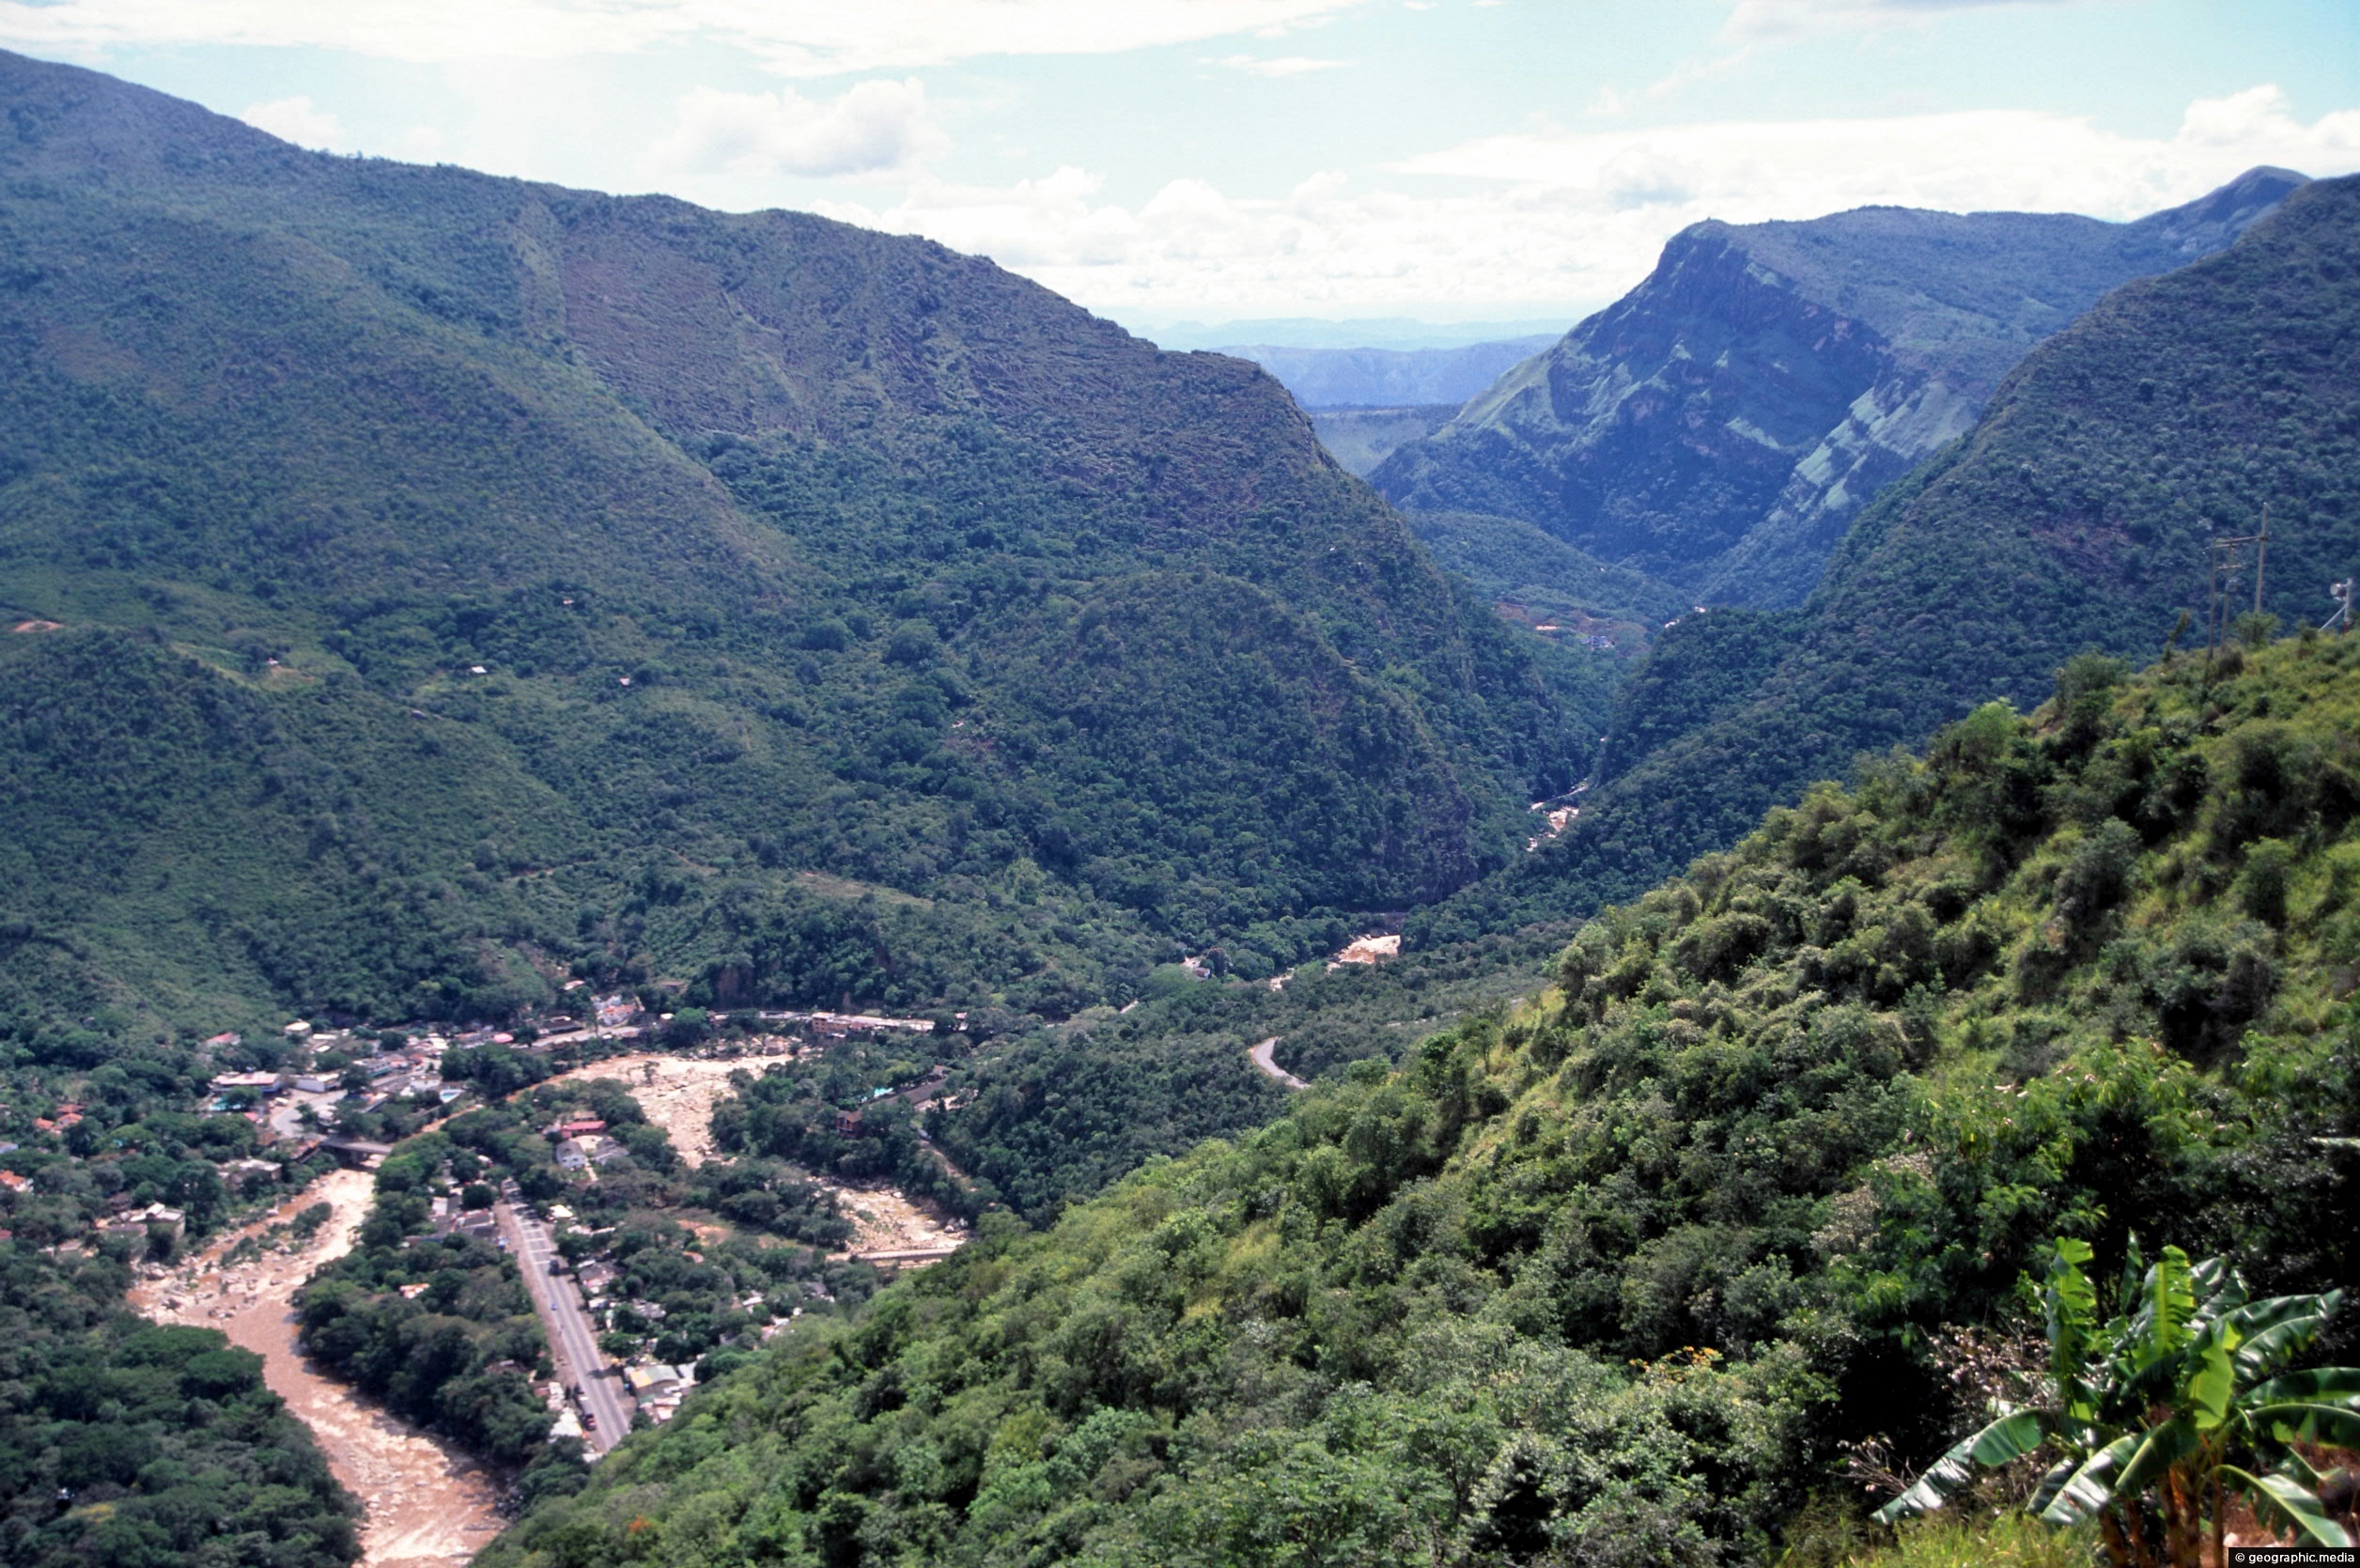 Boqueron and the Sumapaz River in Colombia